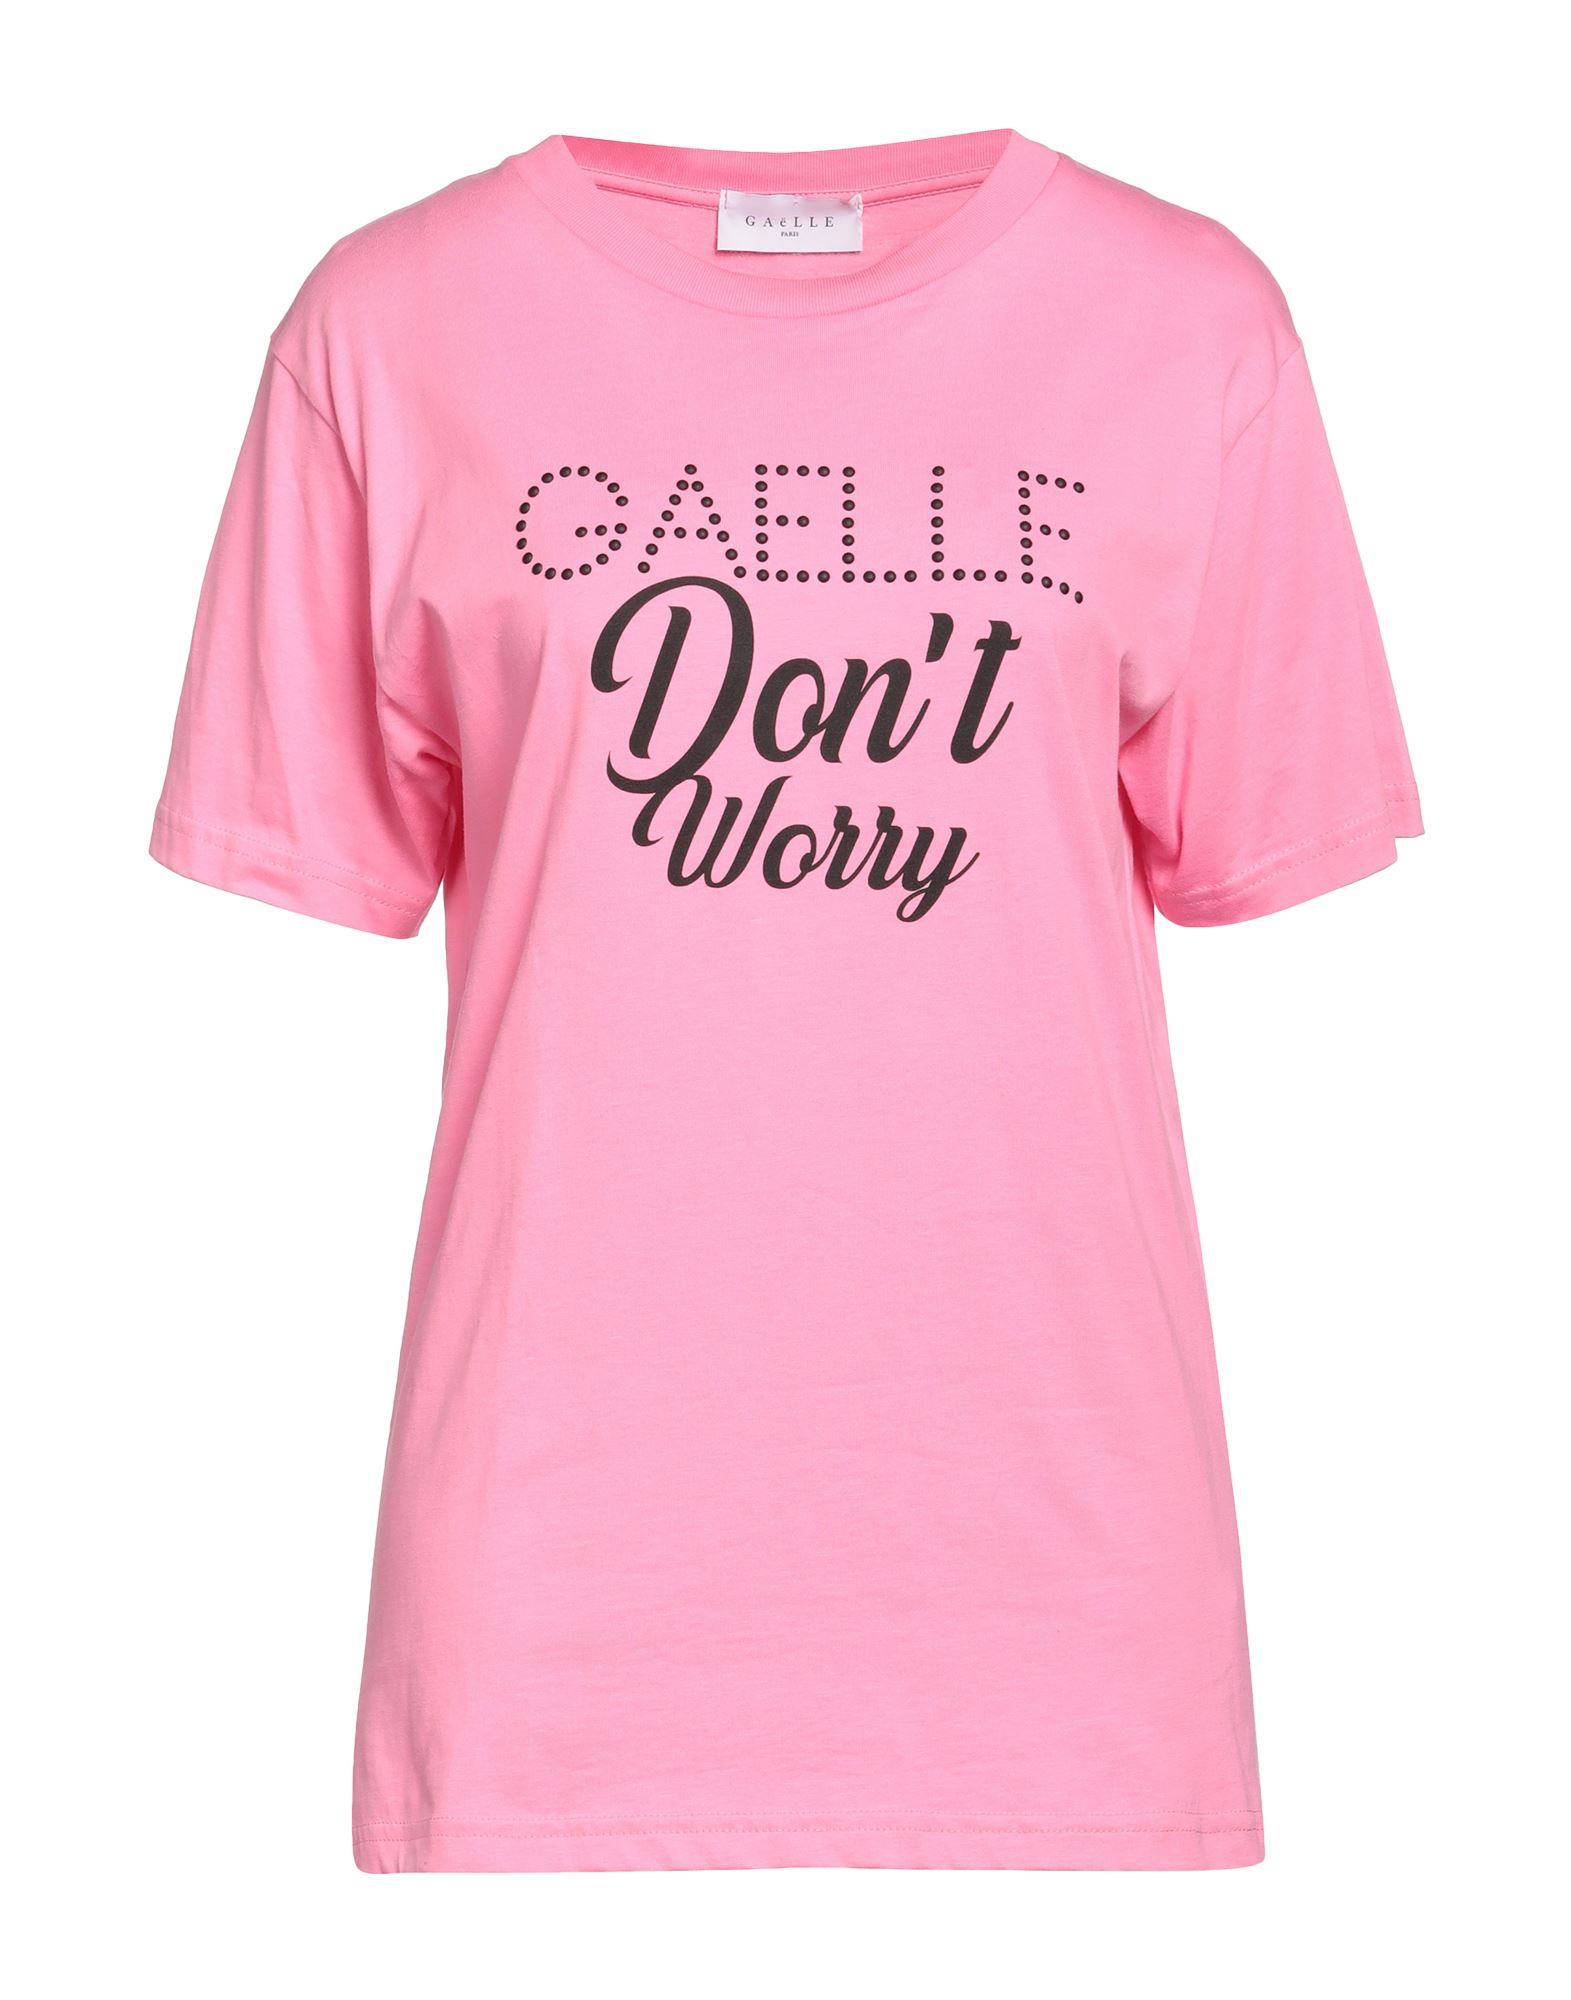 Gaelle Paris T-shirts In Pink